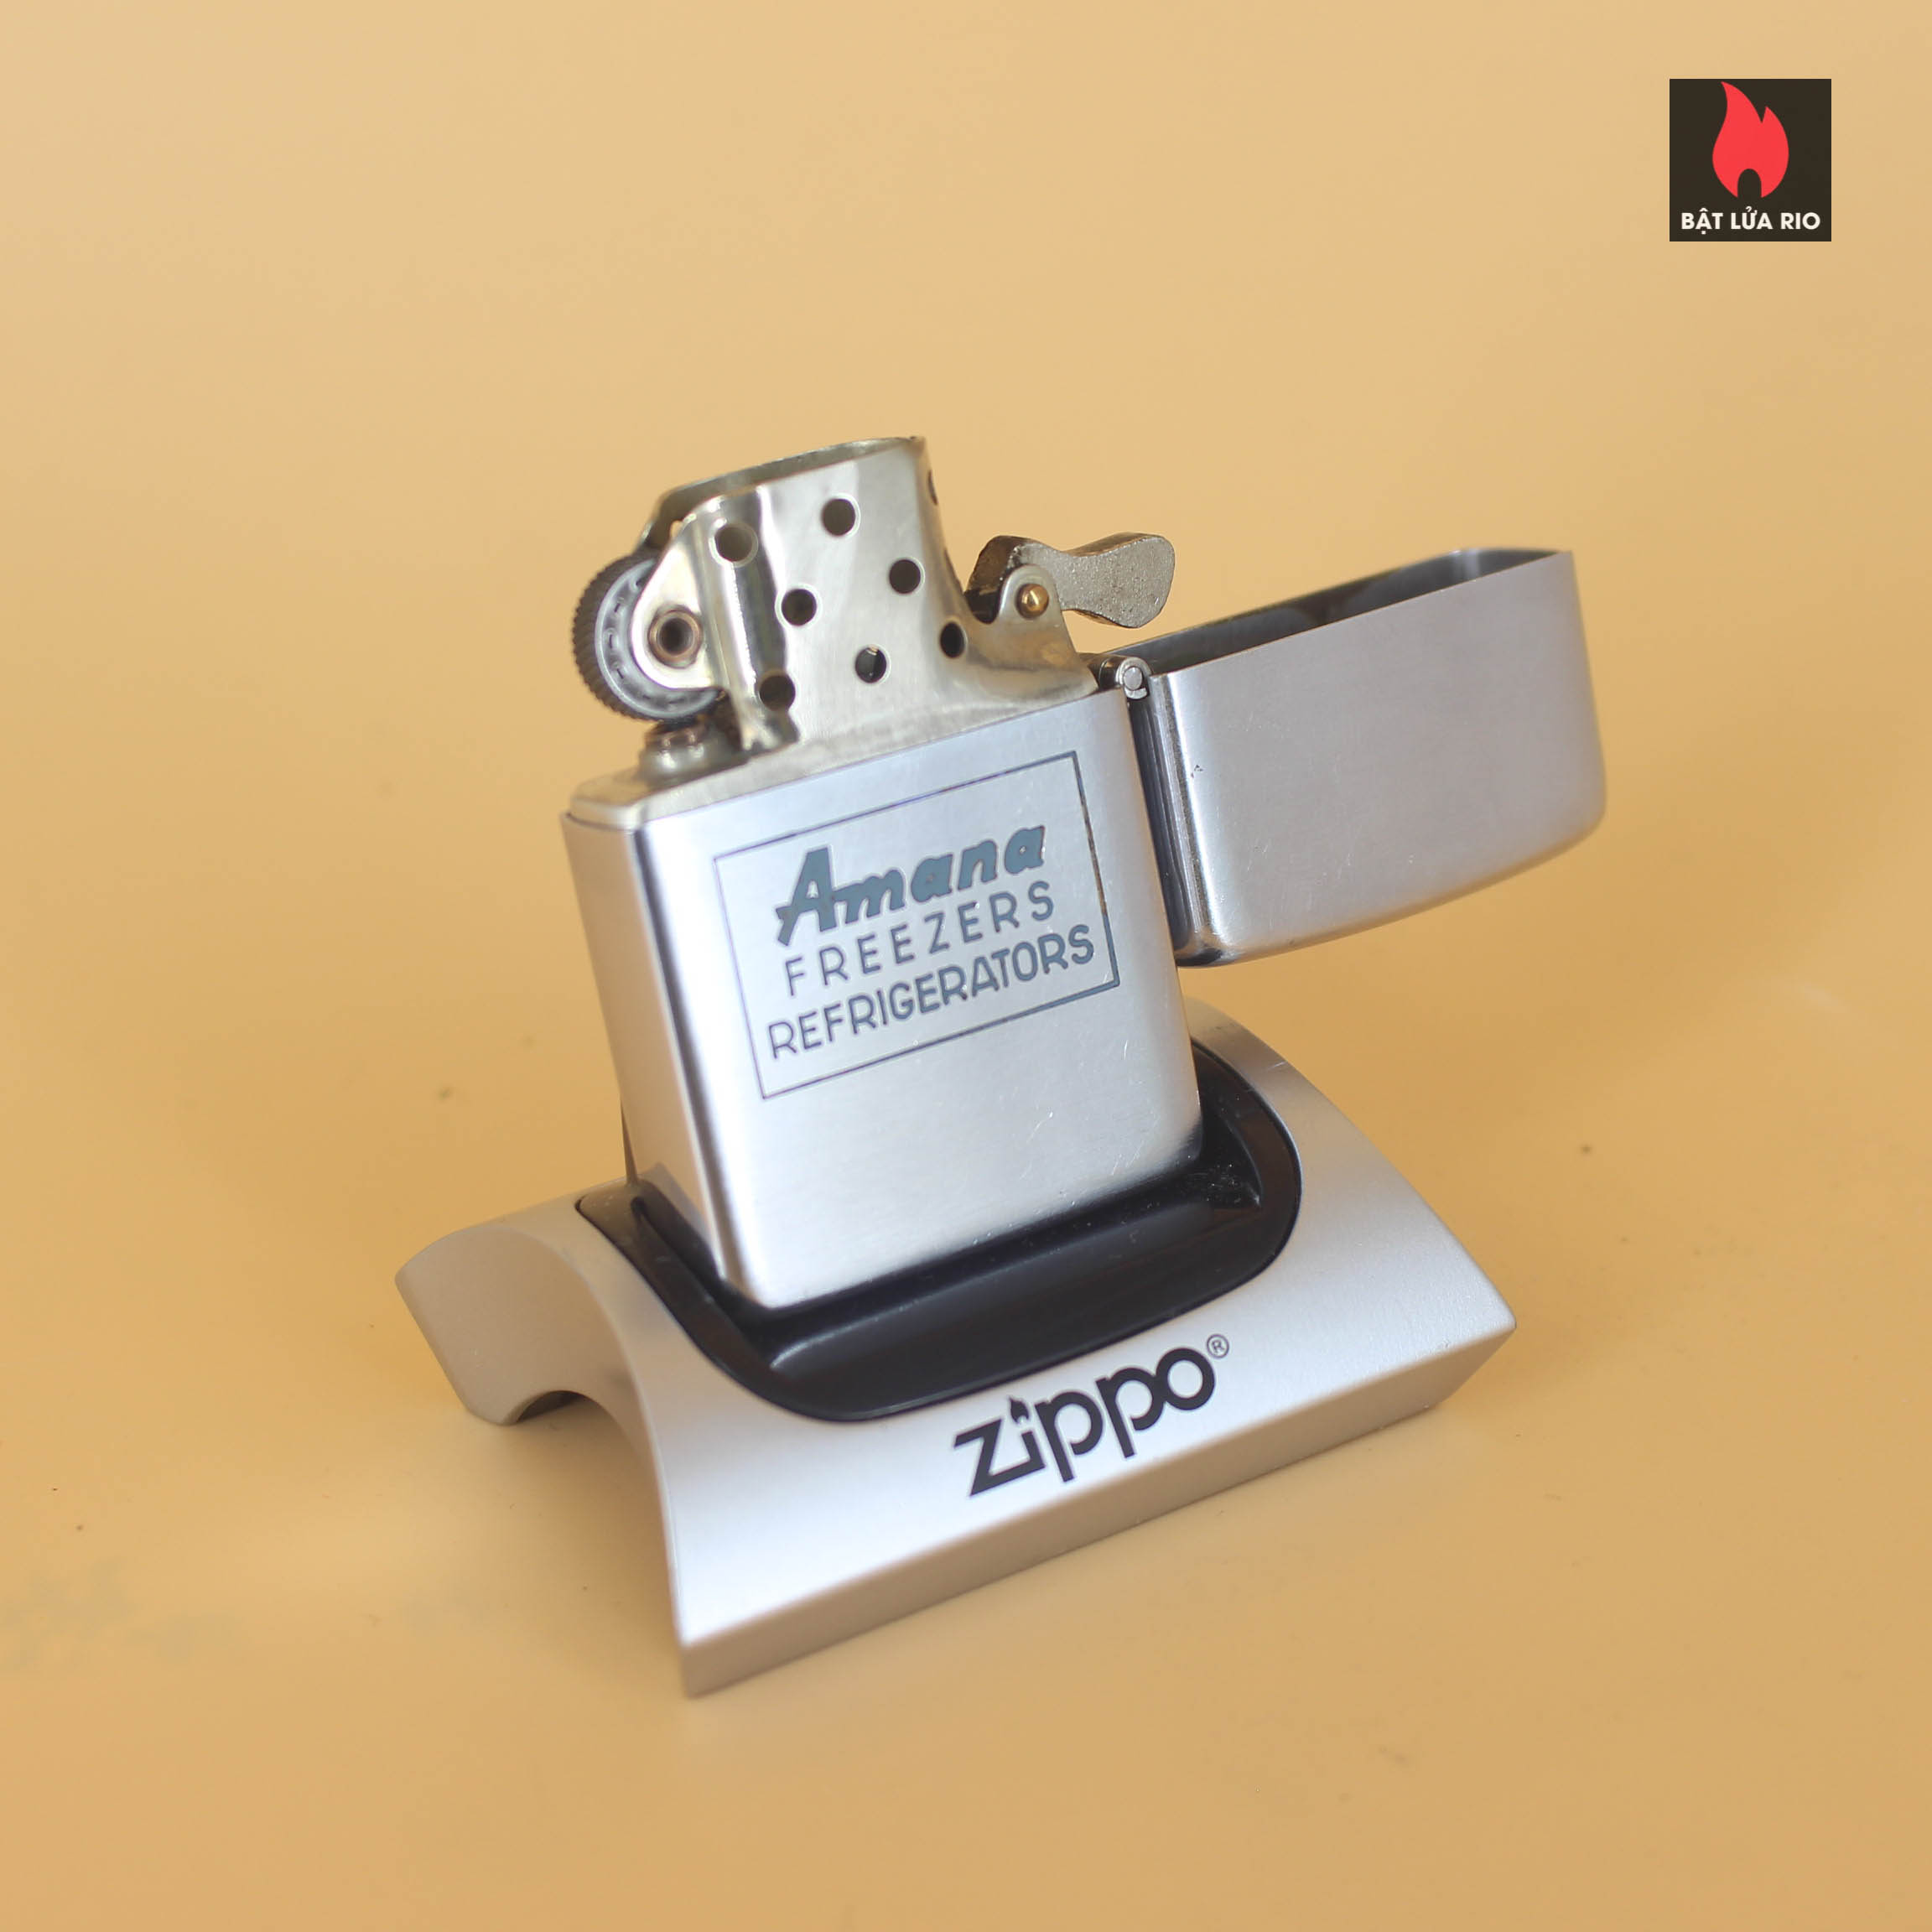 Zippo Xưa 1949-1950 – Amana Freezers 2